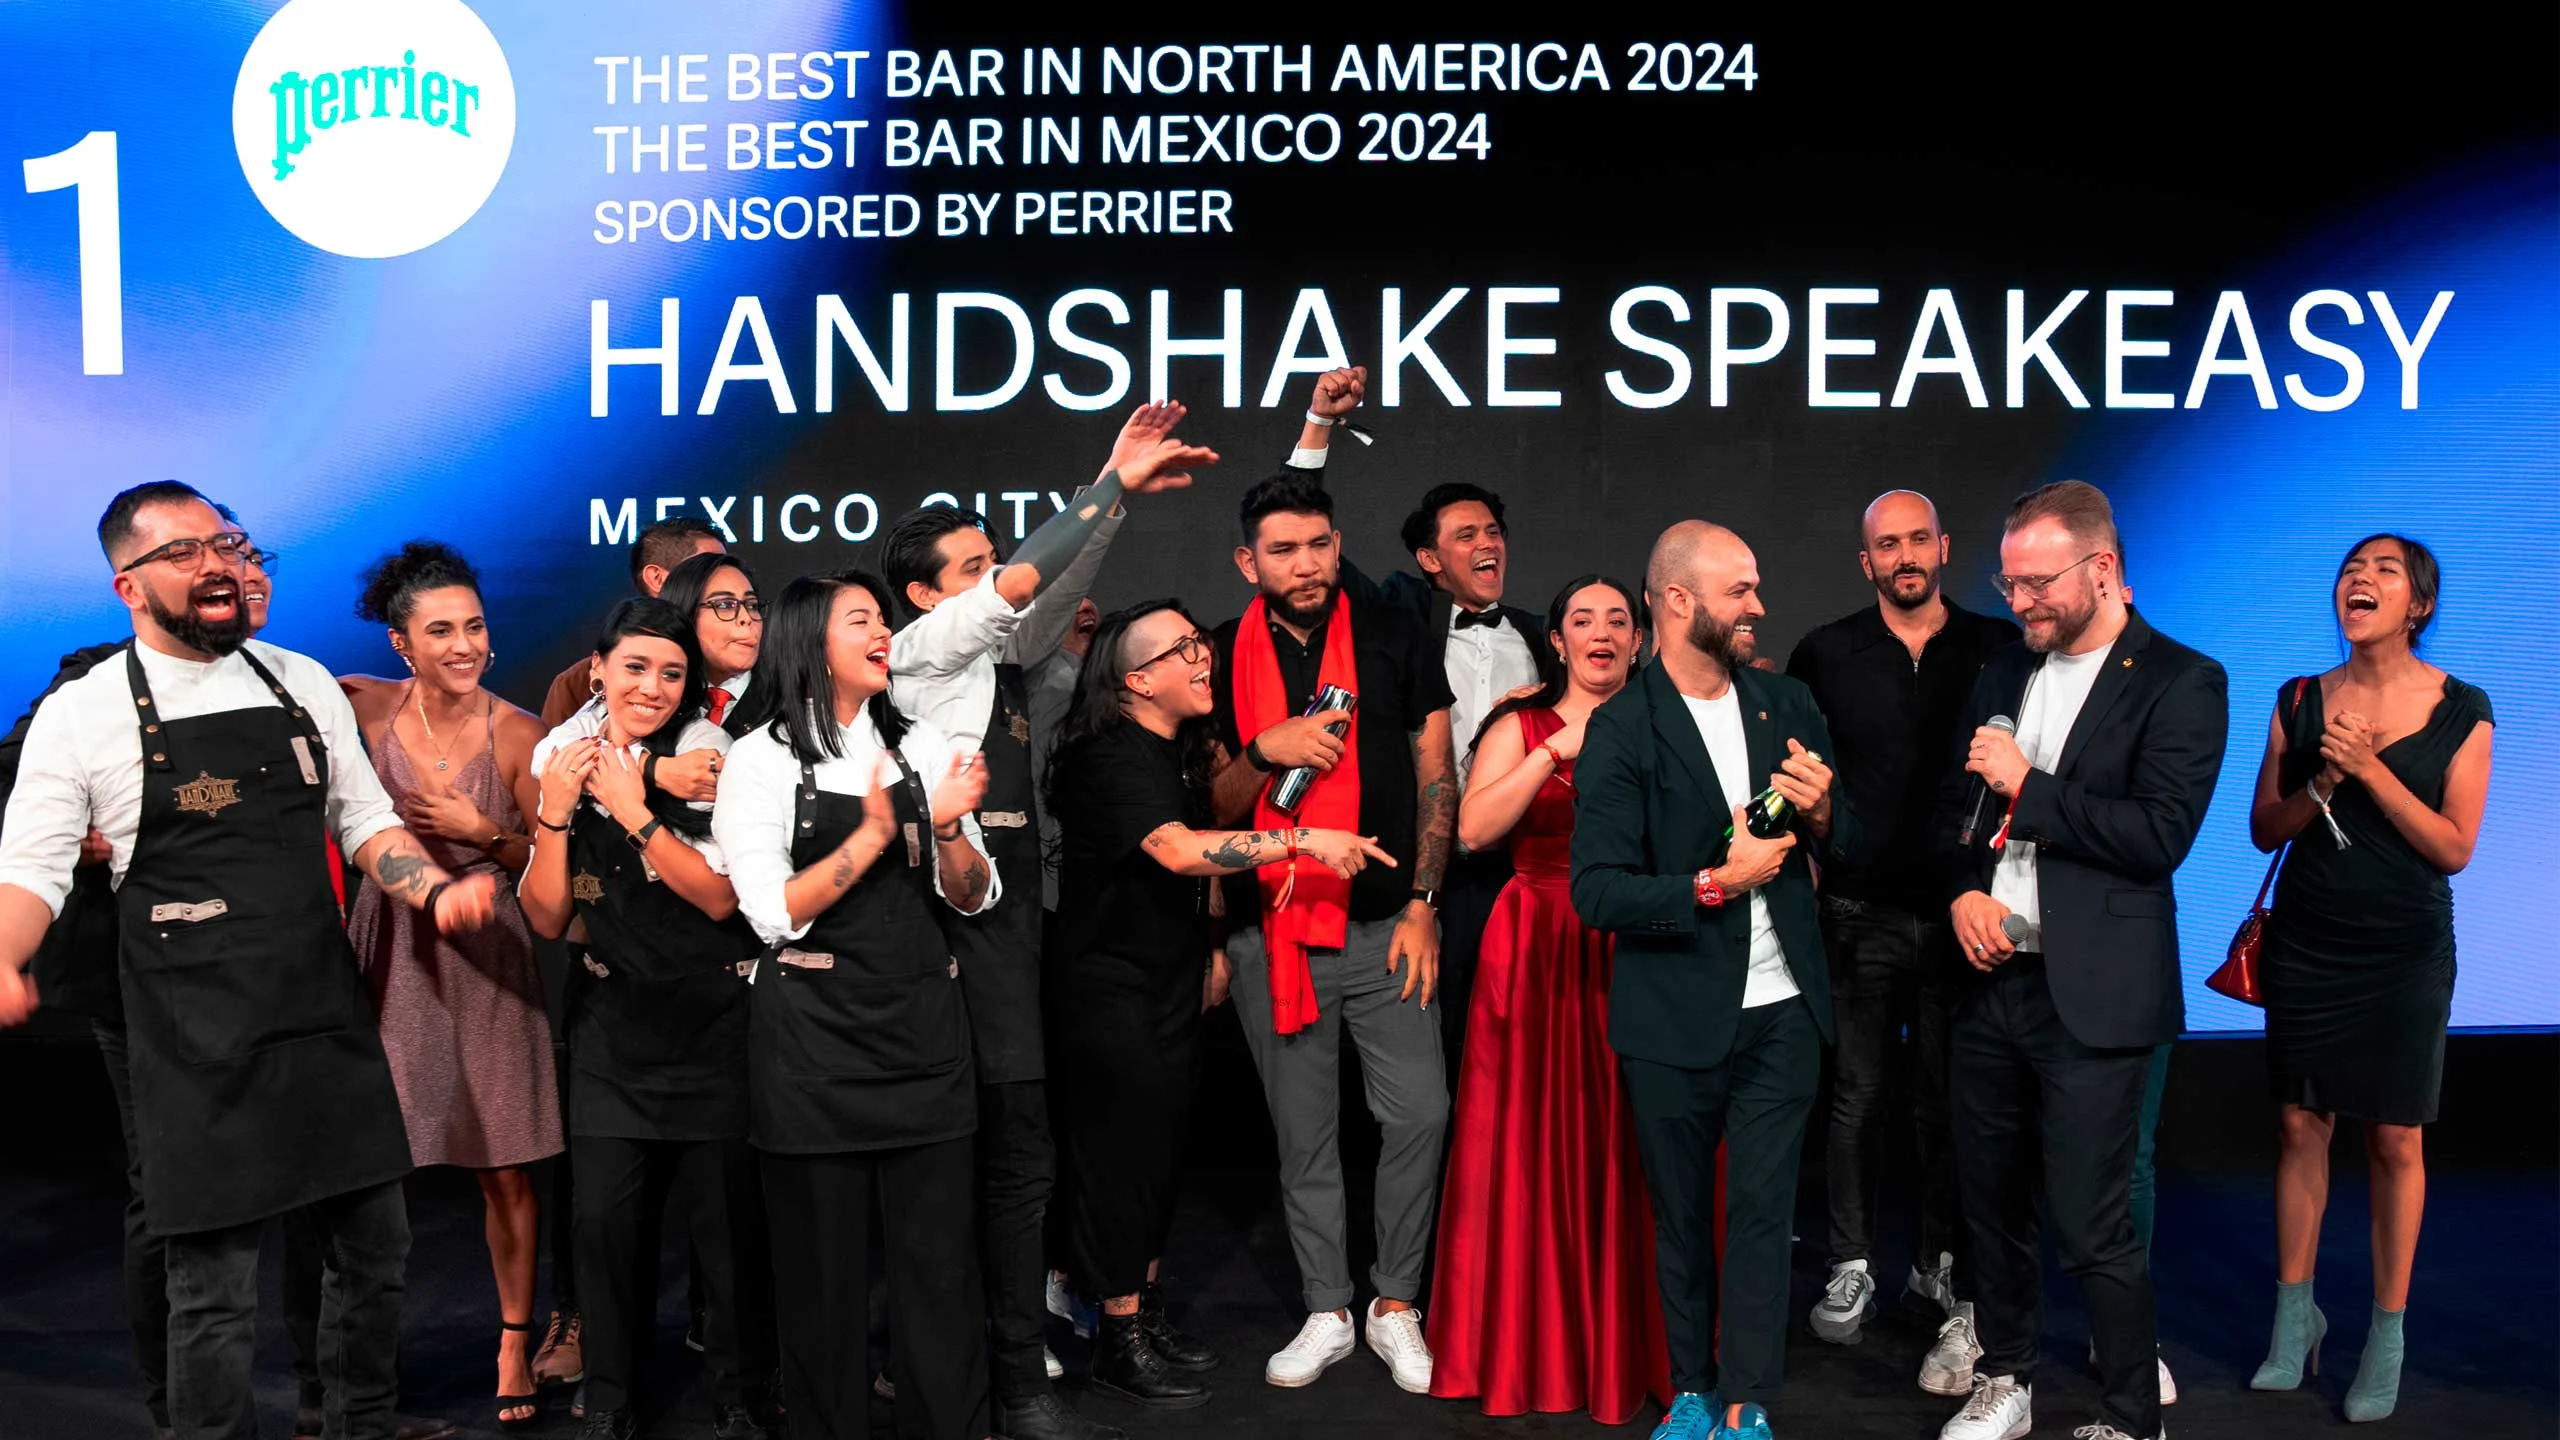 50 Best Bars: Handshake es el mejor bar de Norteamérica